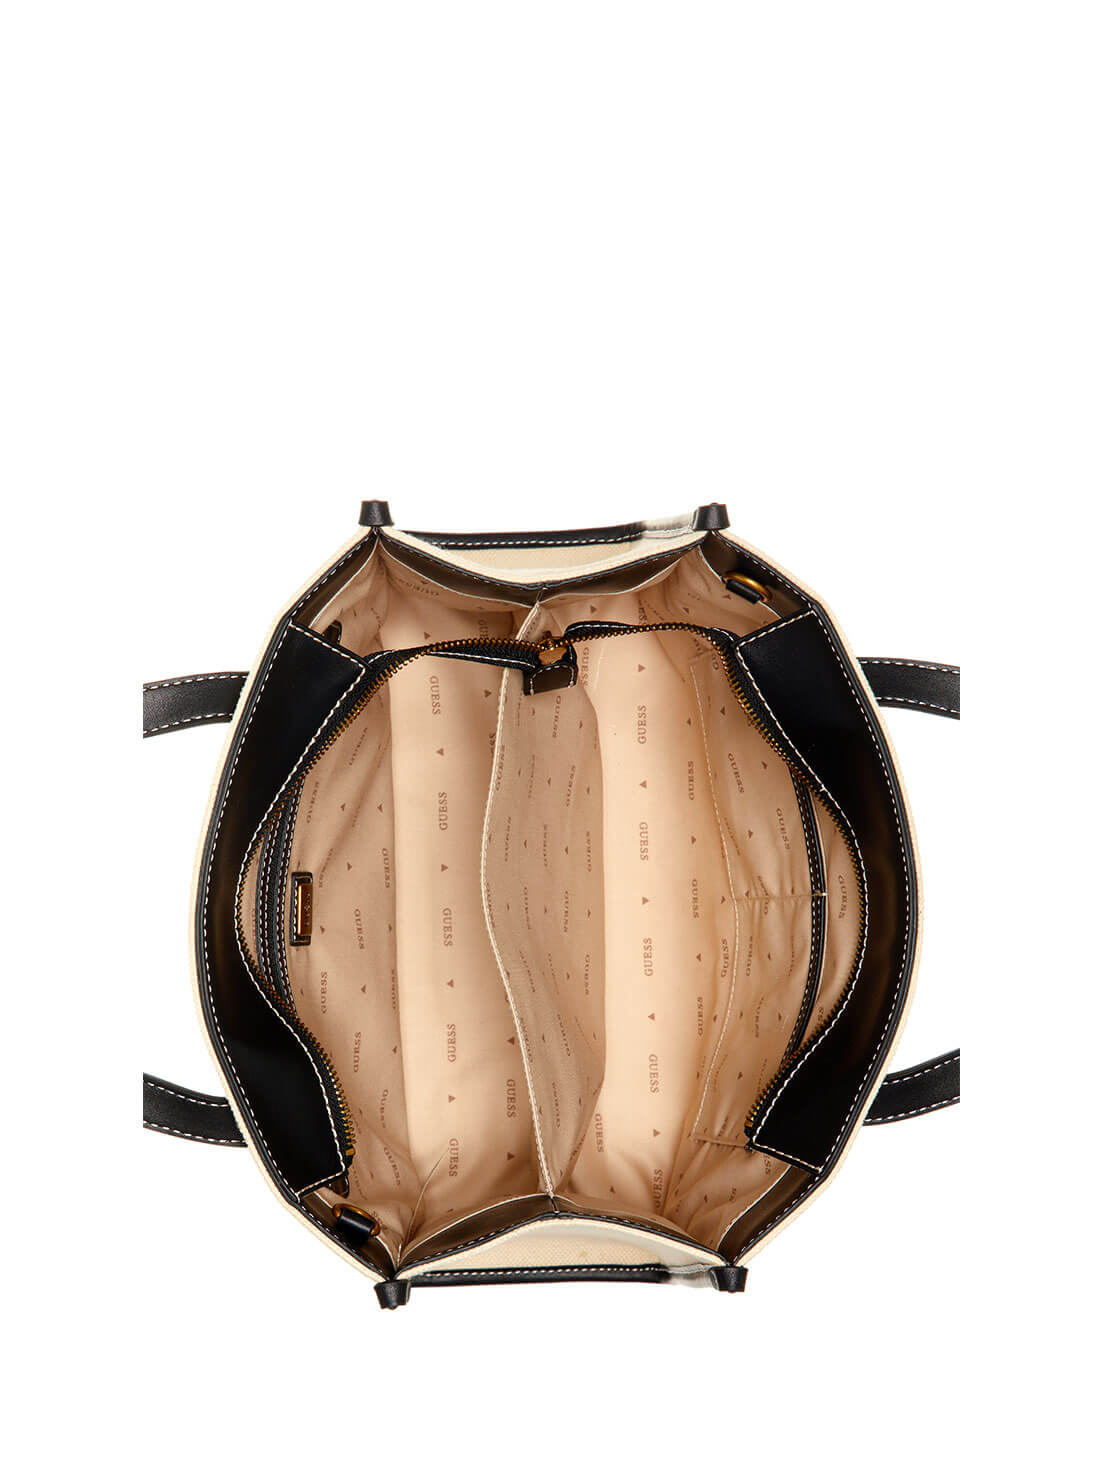 Black and Natural Silvana Small Tote Bag | GUESS Women's Handbags | inside view